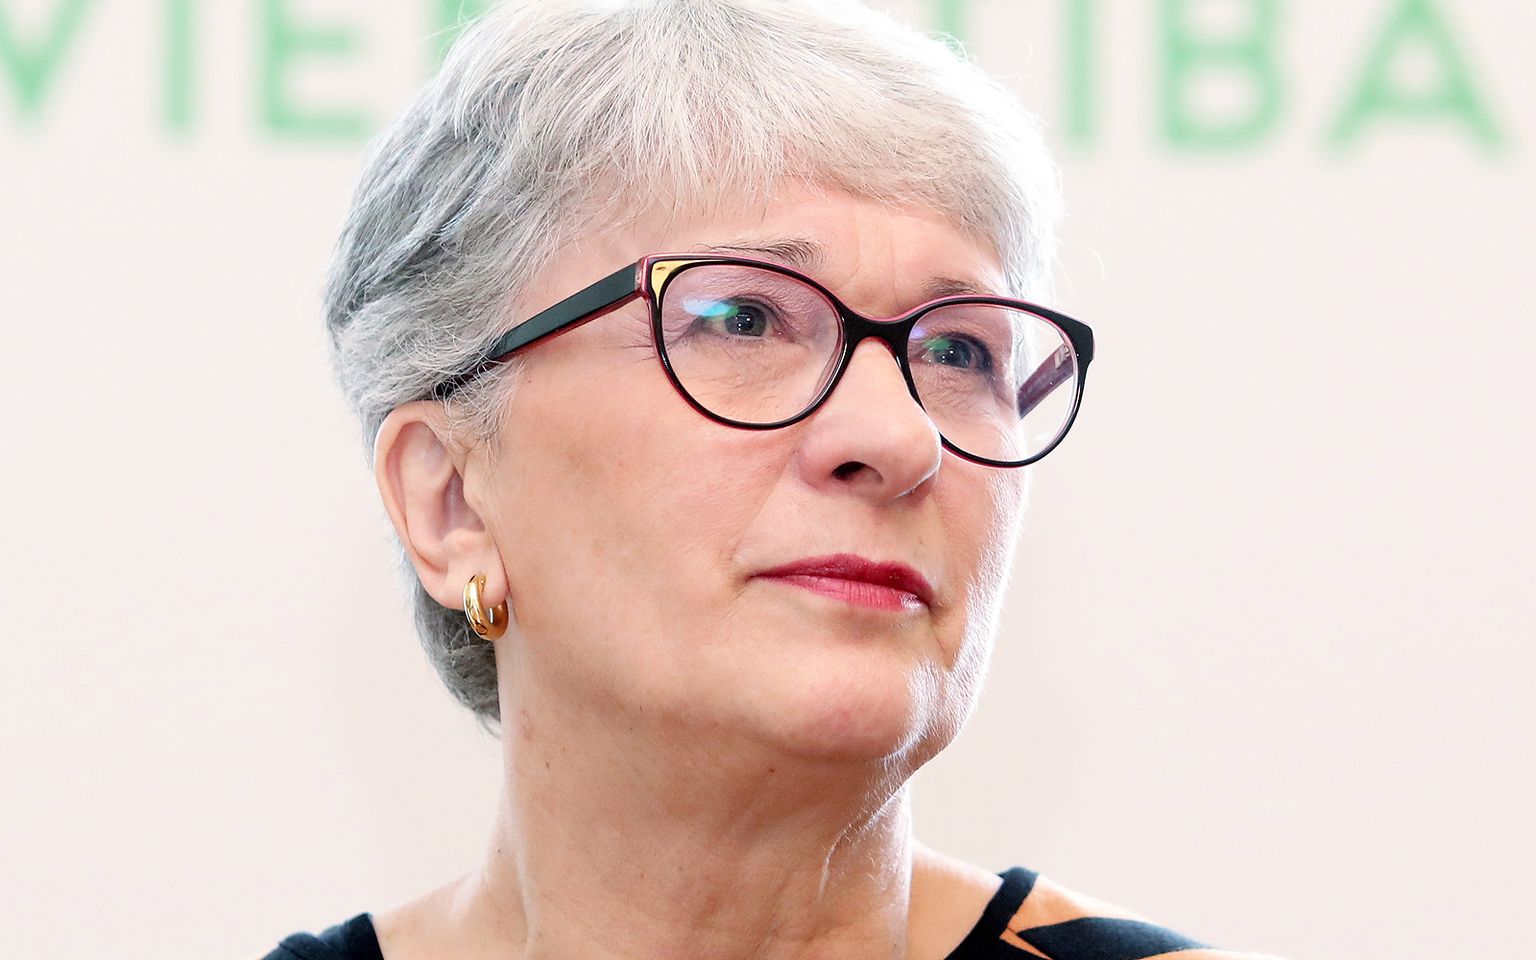 Eiropas Parlamenta deputāte Sandra Kalniete